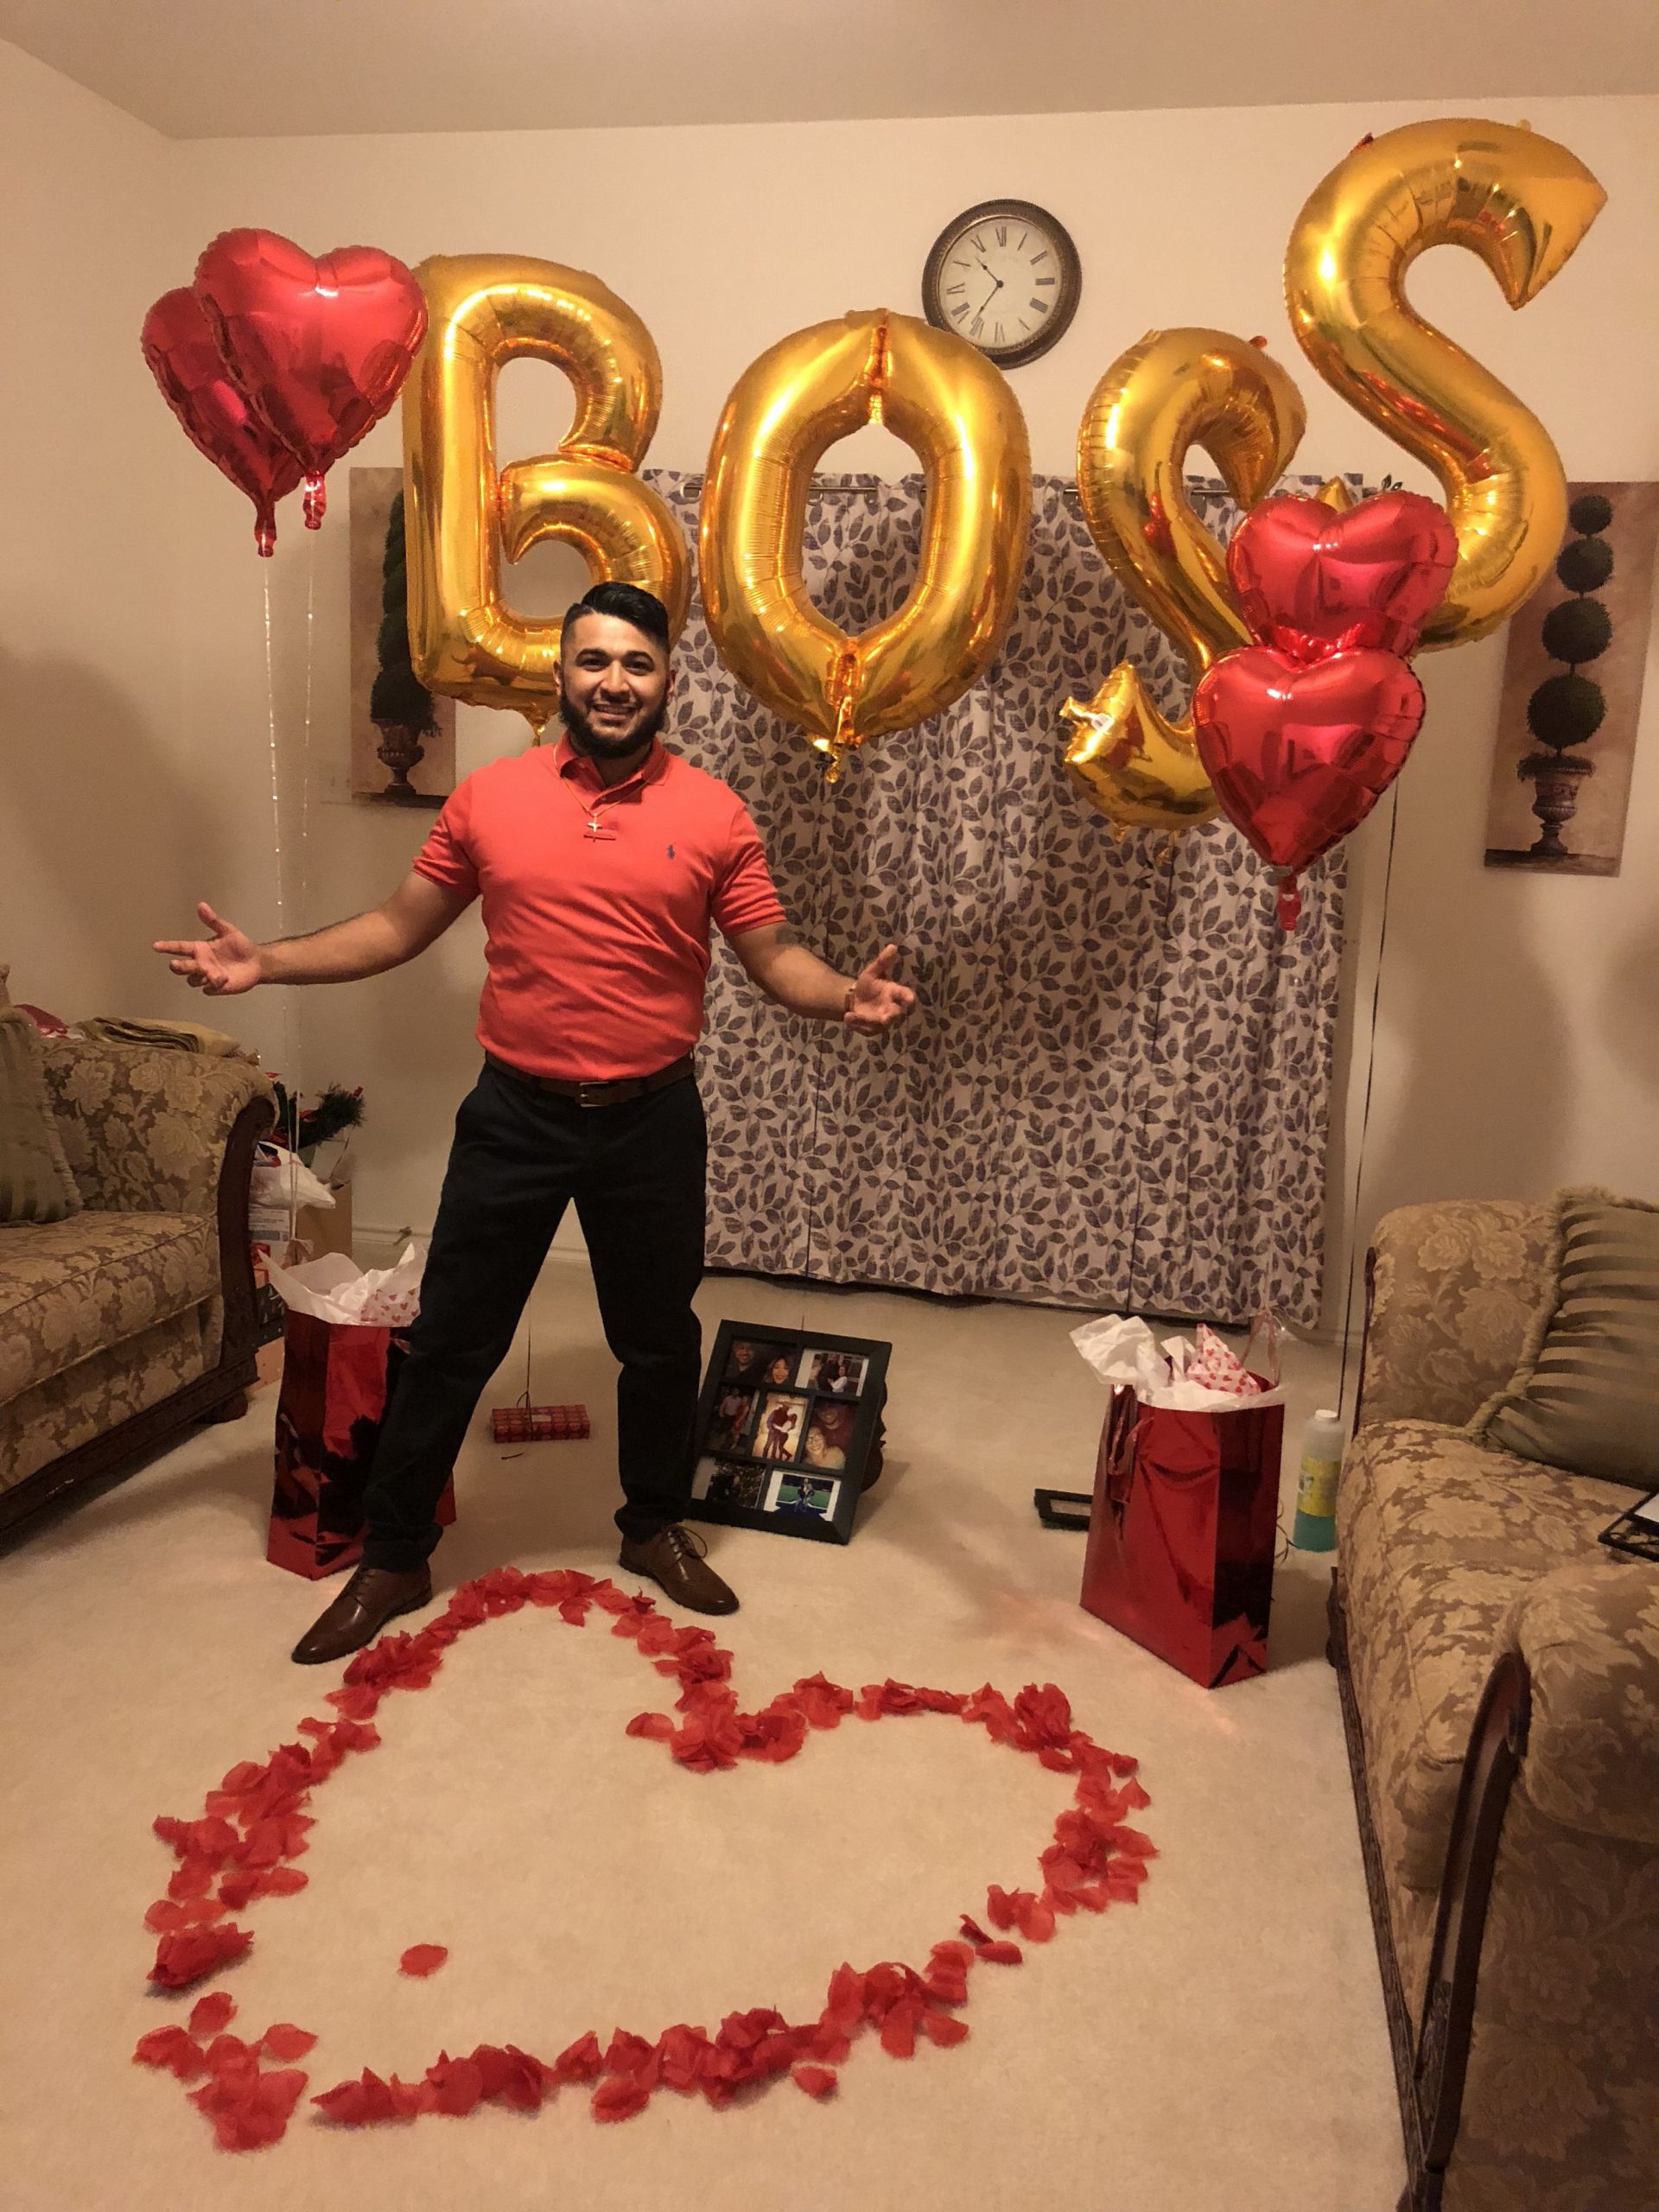 Surprise Gift Ideas For Boyfriend
 When you surprise your boyfriend for his birthday 